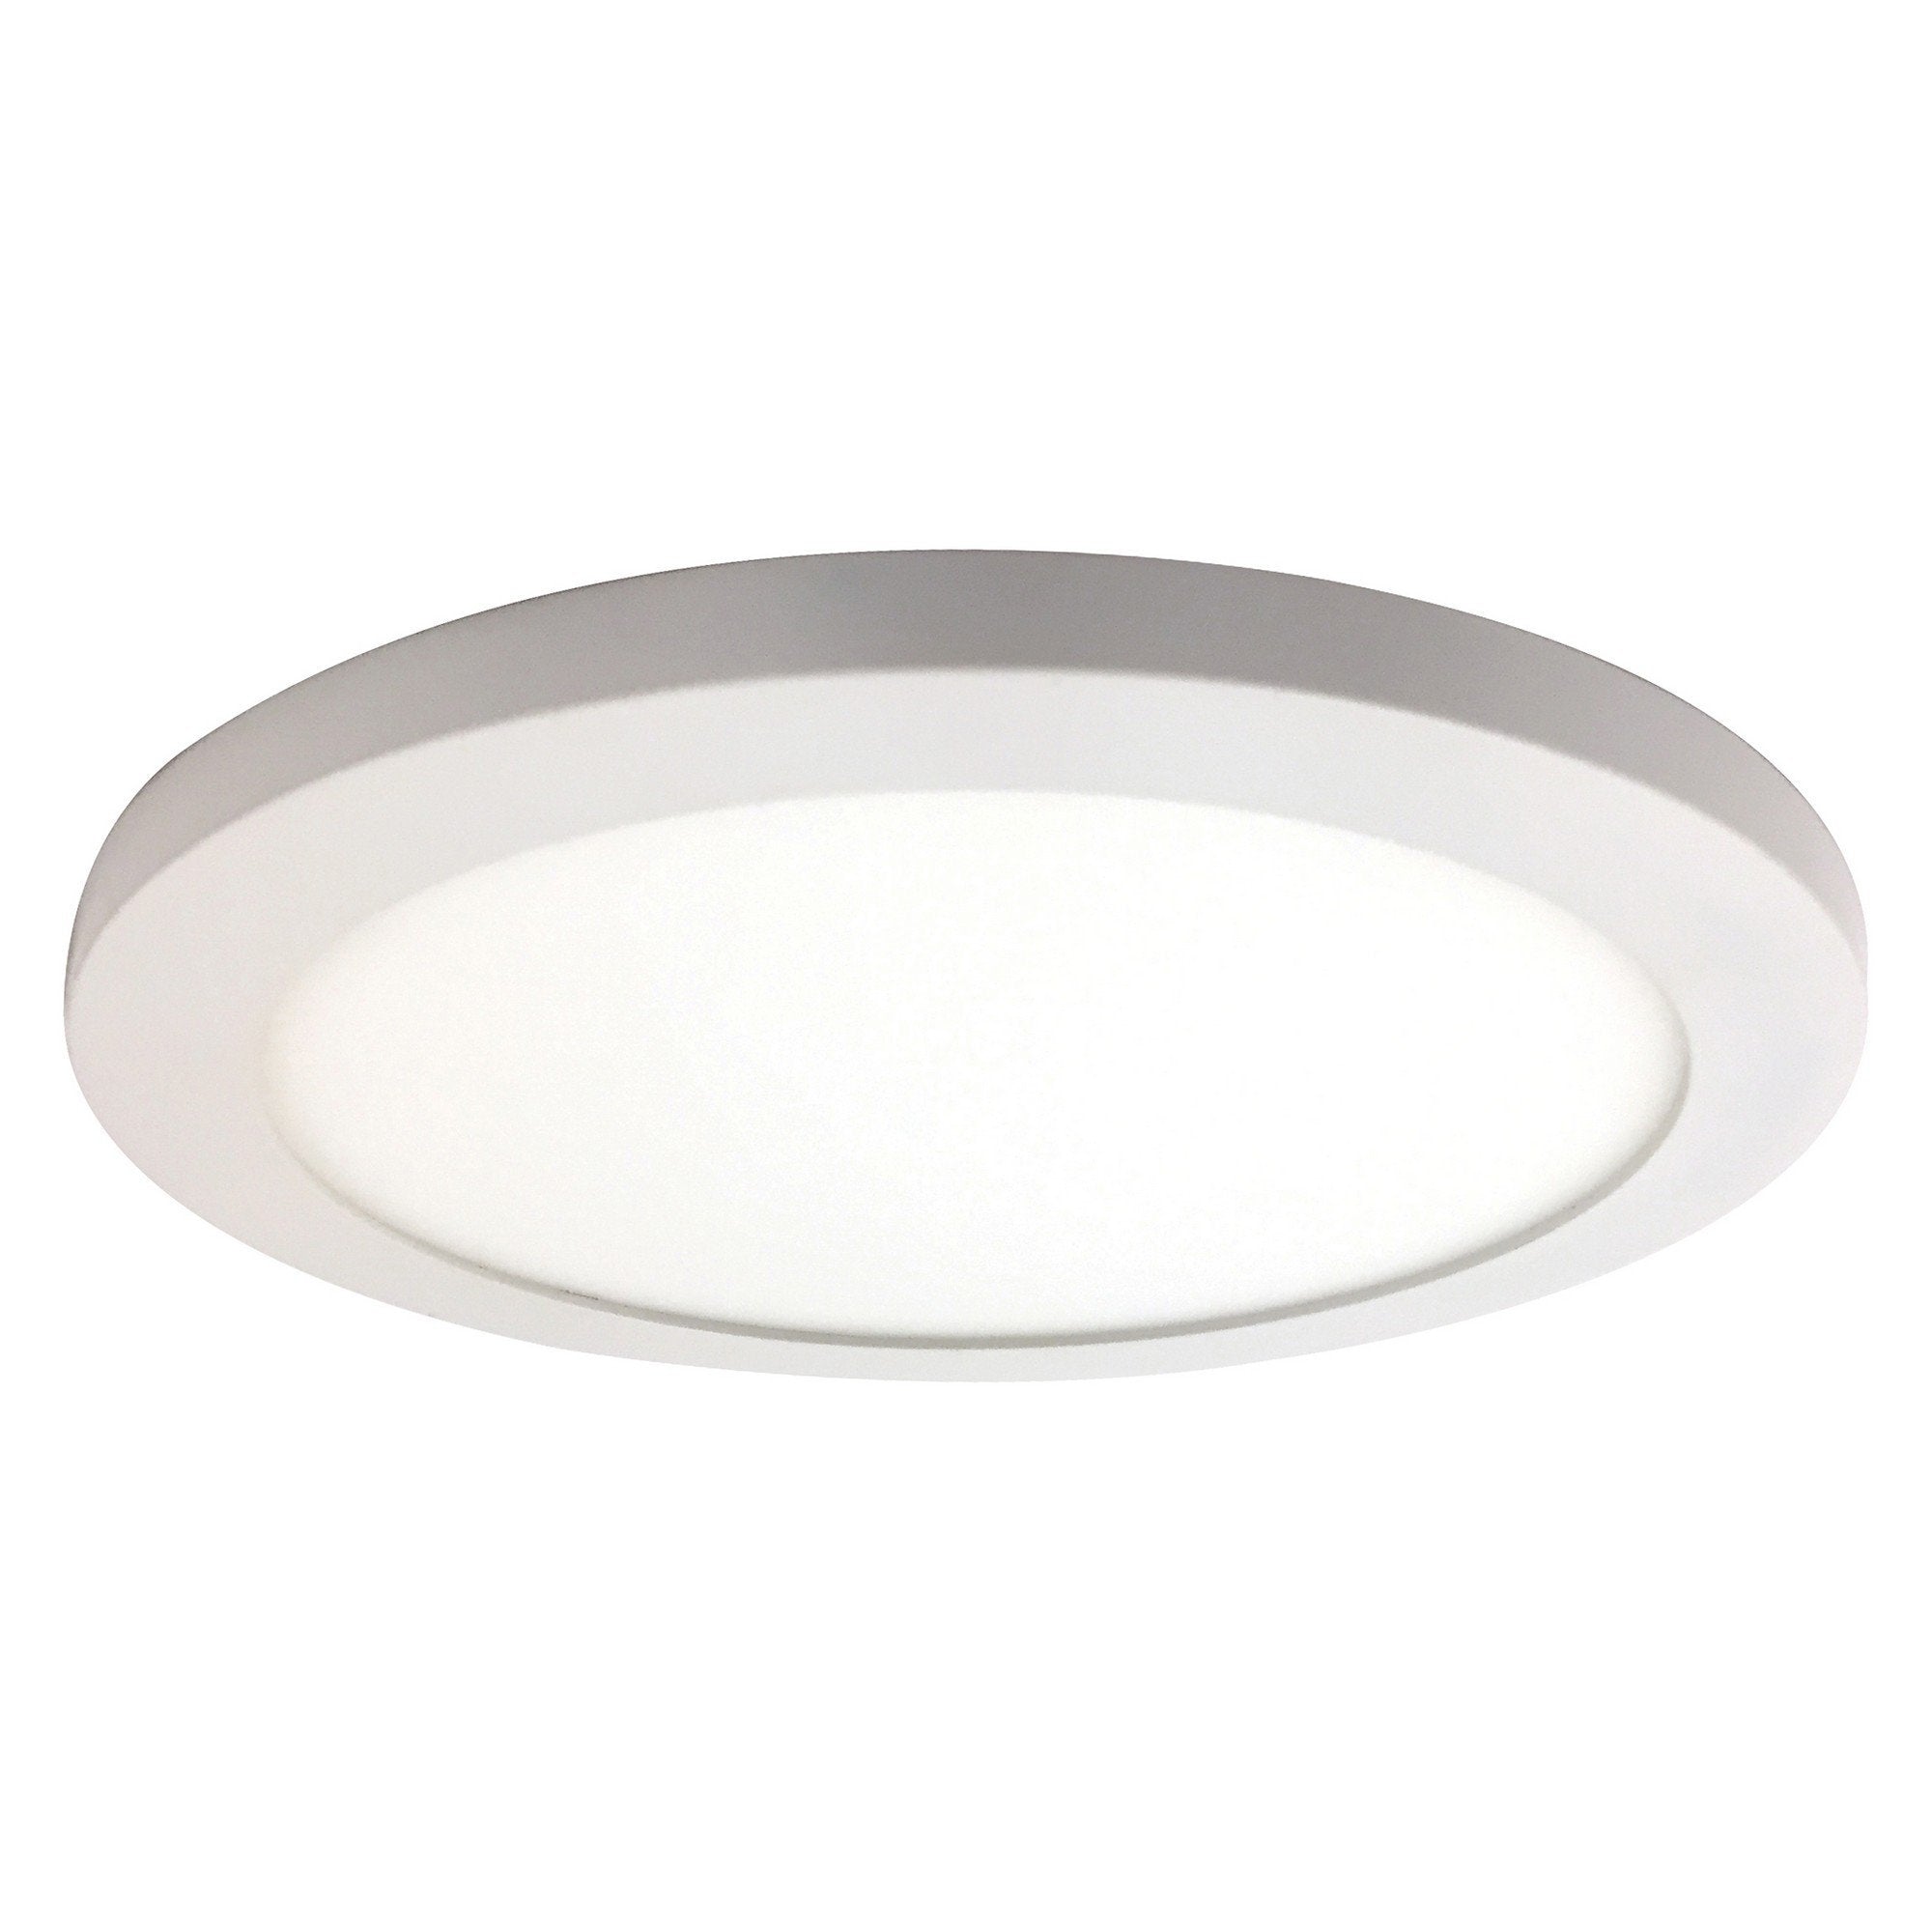 Disc (l) LED Round Flush Mount - White Ceiling Access Lighting 